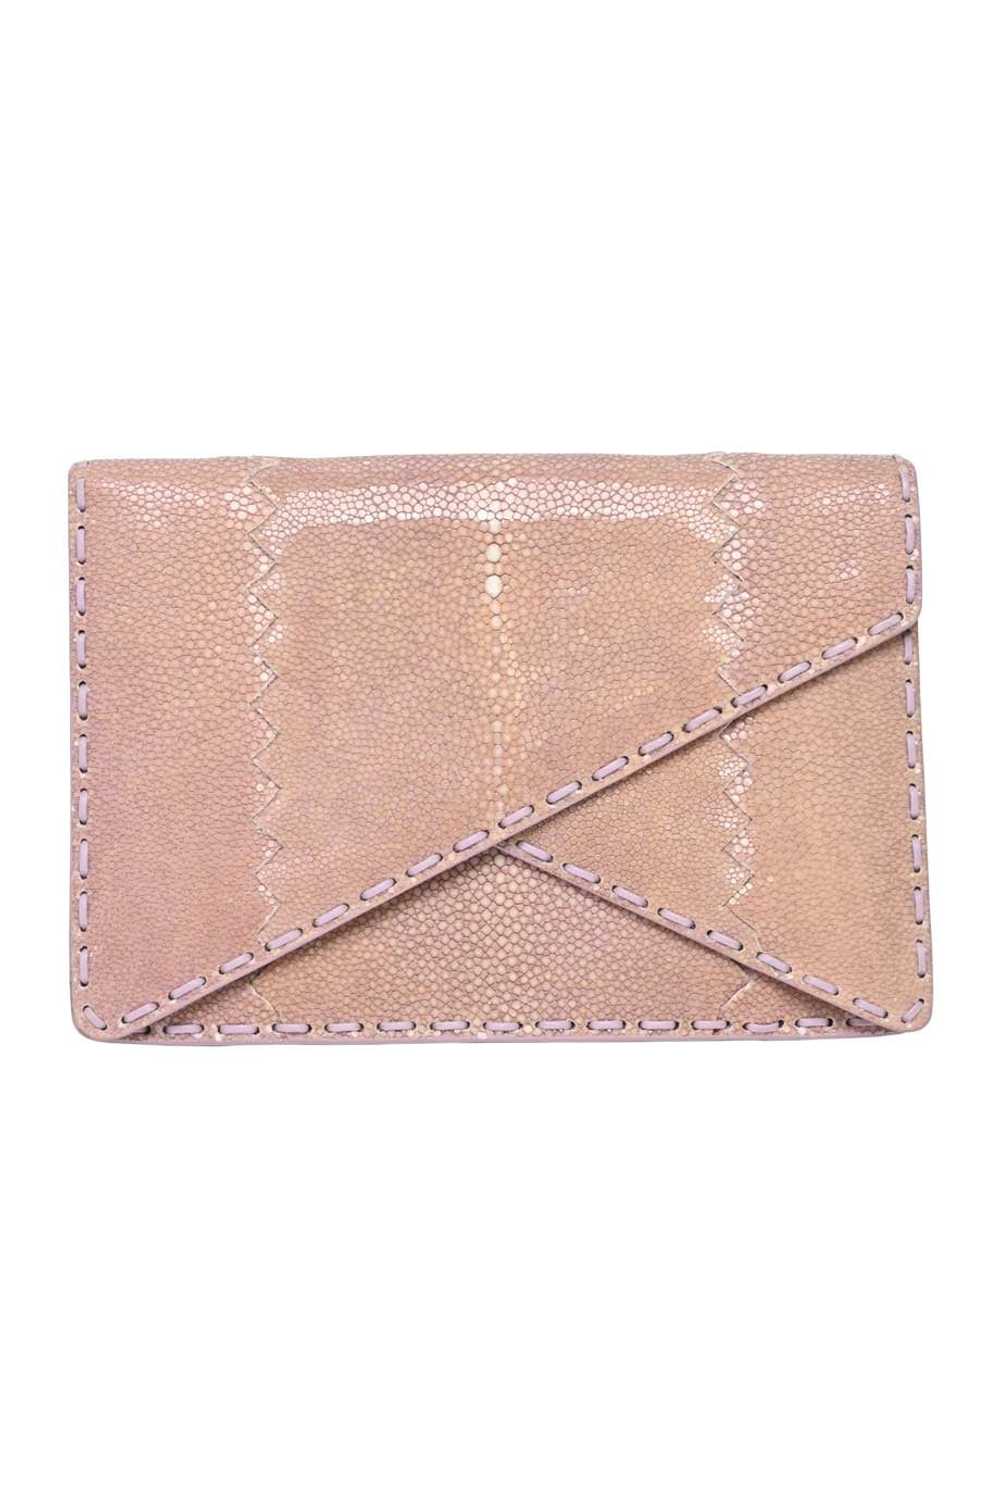 BOTTEGA VENETA Lilac Stingray Leather Envelop Clu… - image 1